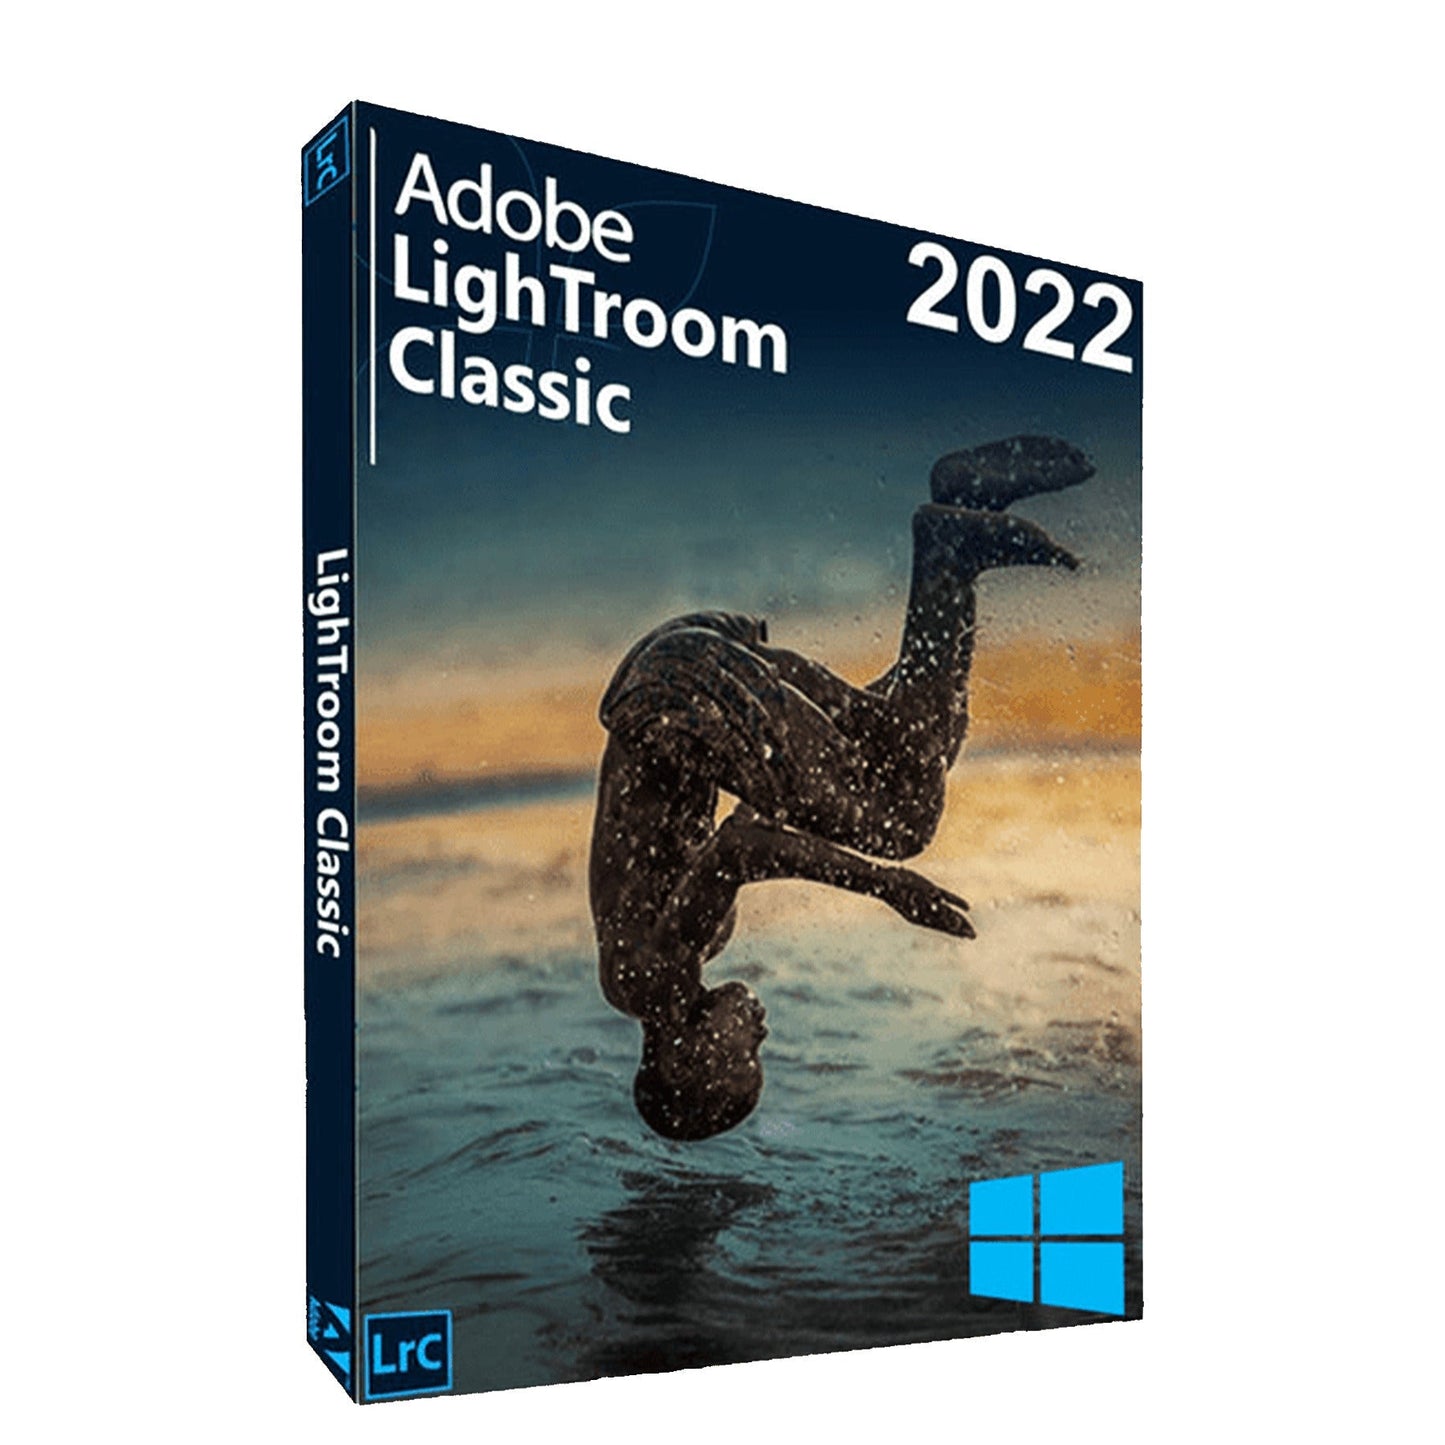 Adobe Lightroom Classic 2022 Full Version Lifetime License